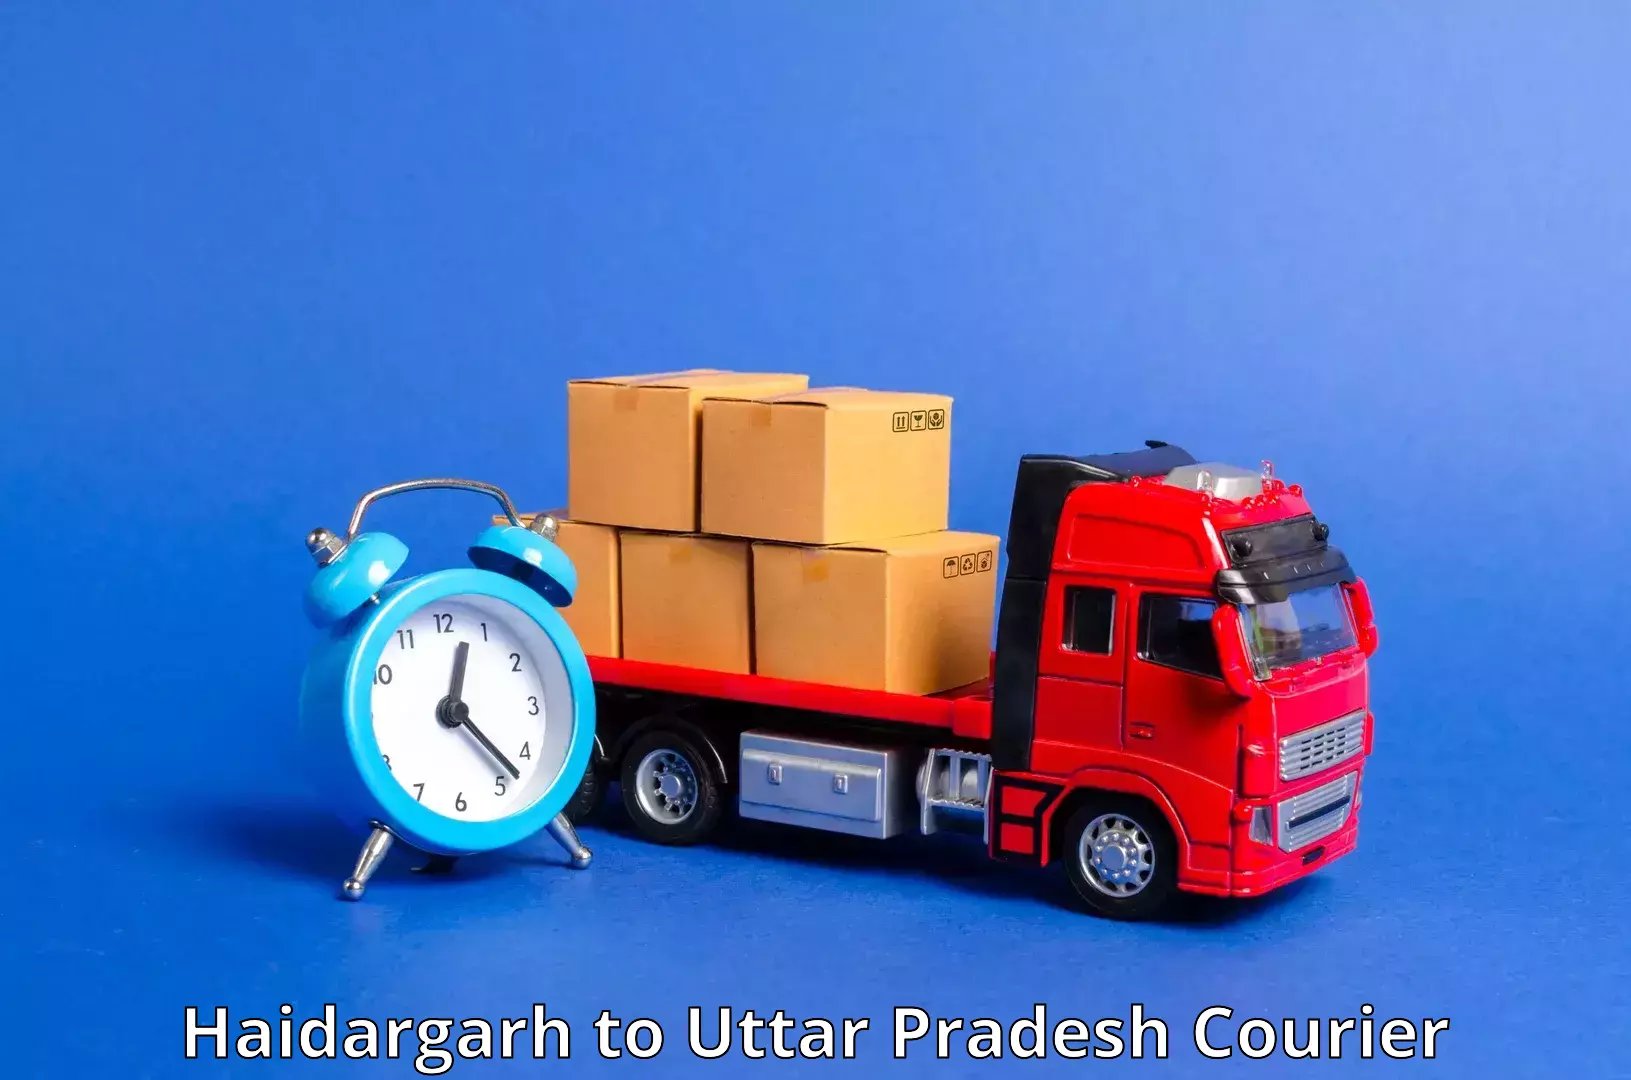 Express delivery solutions Haidargarh to Karchhana